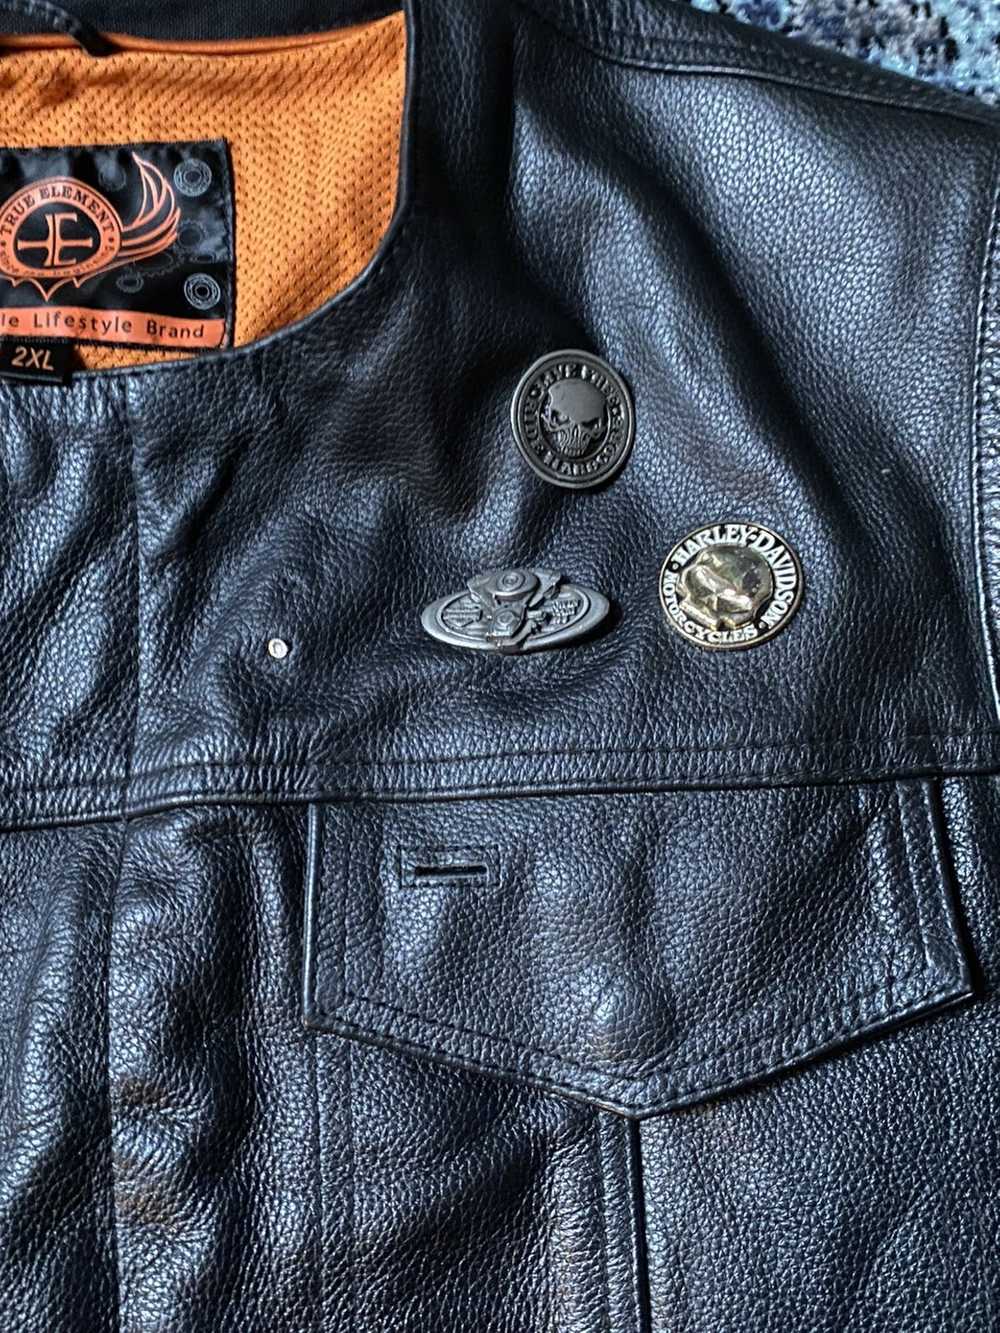 Leather Jacket × Vintage BIKERS Leather Vest Jack… - image 3